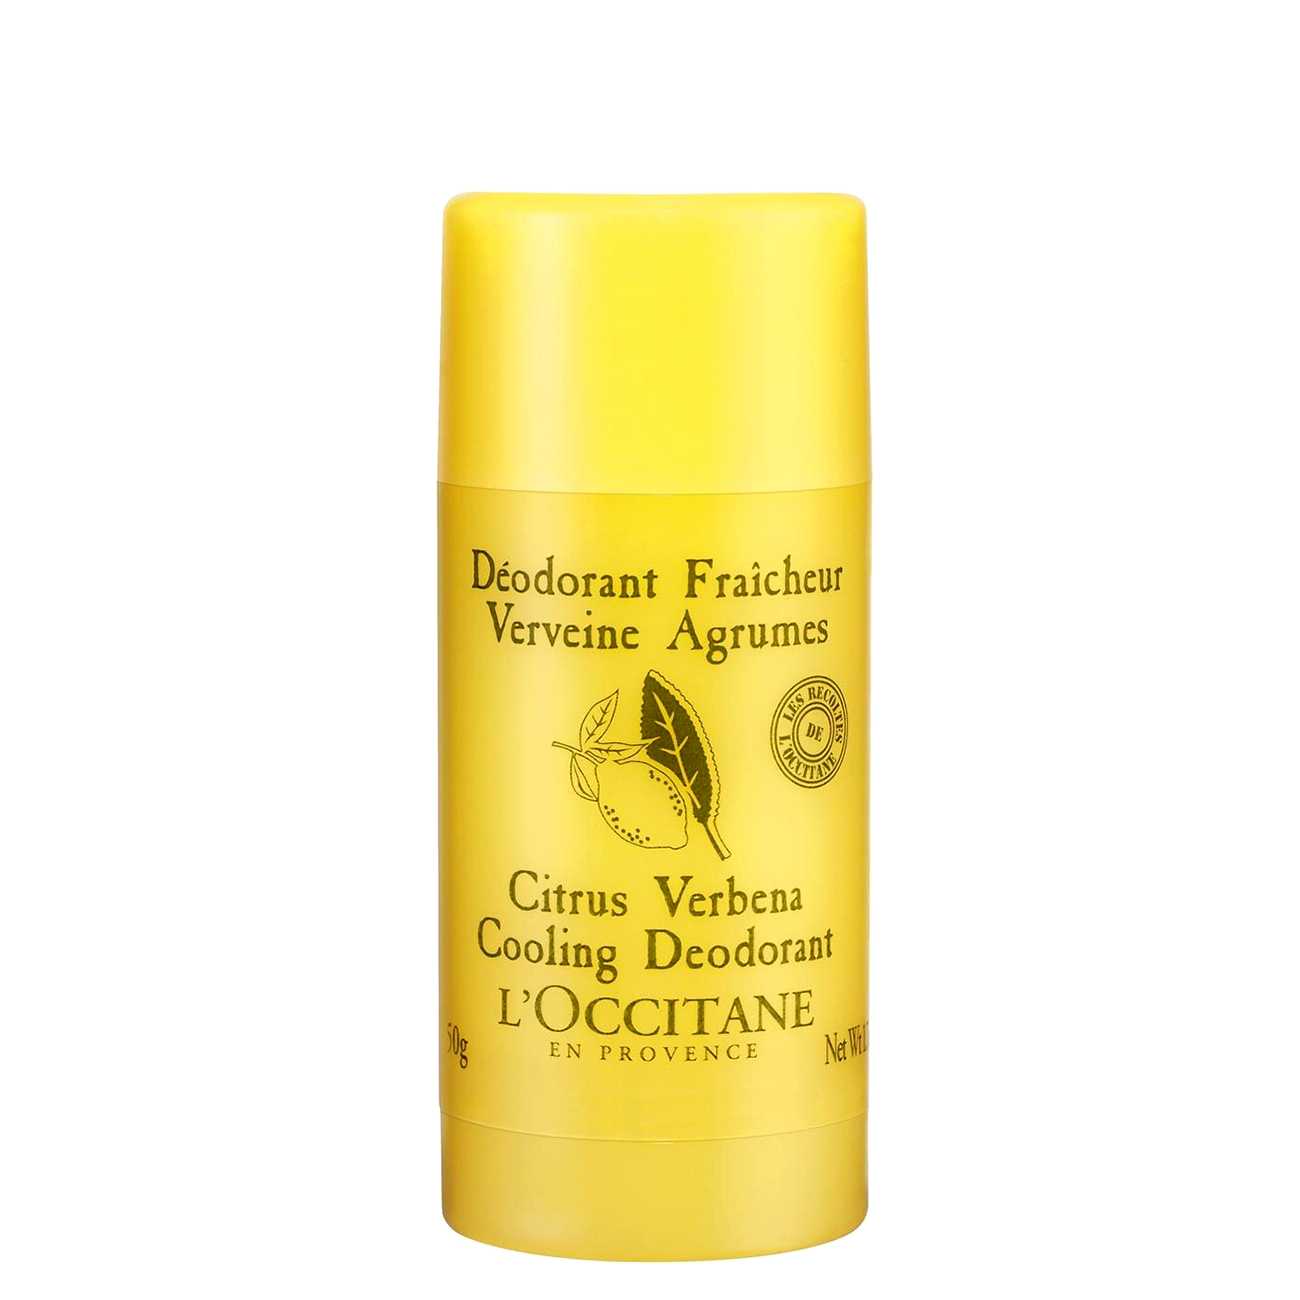 Deodorant L’occitane CITRUS VERBENA COOLING DEODORANT 50 G cu comanda online